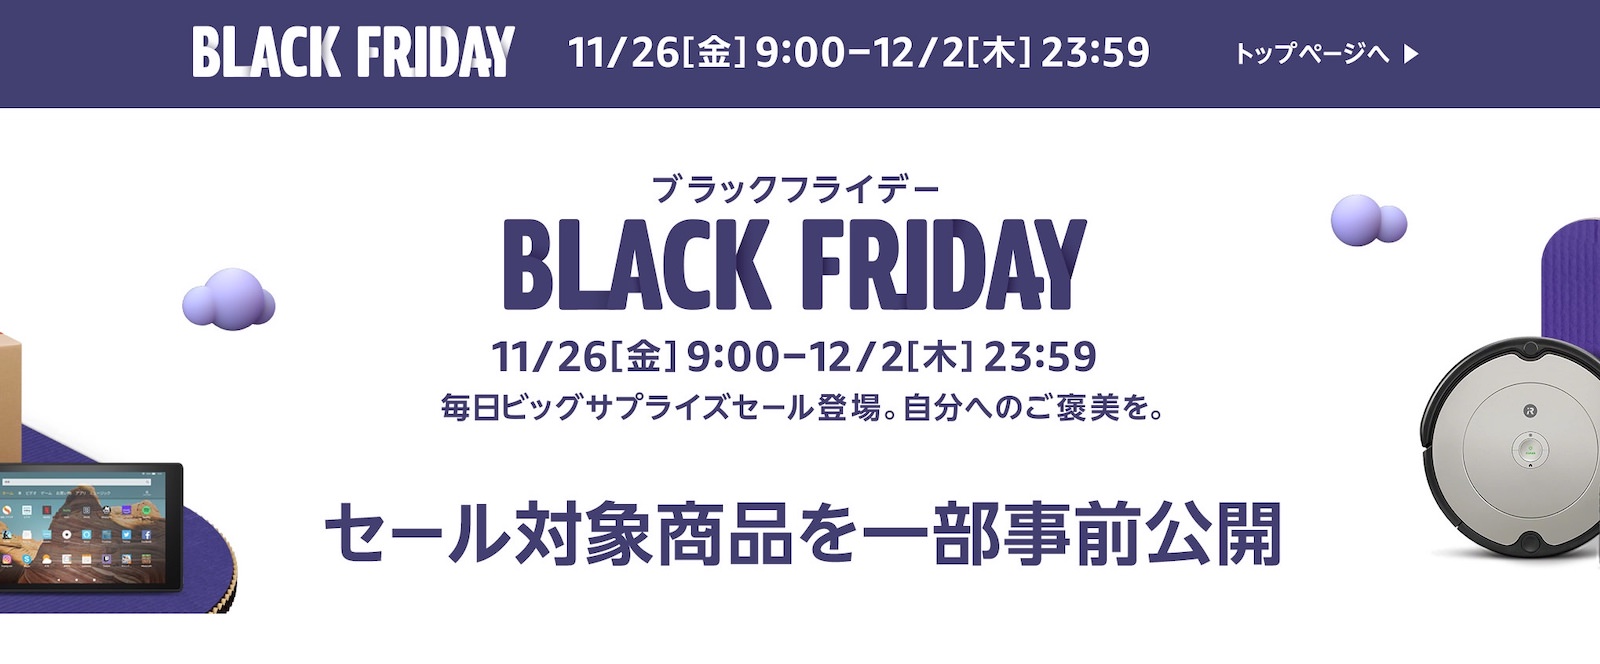 Amazon Black Friday sale